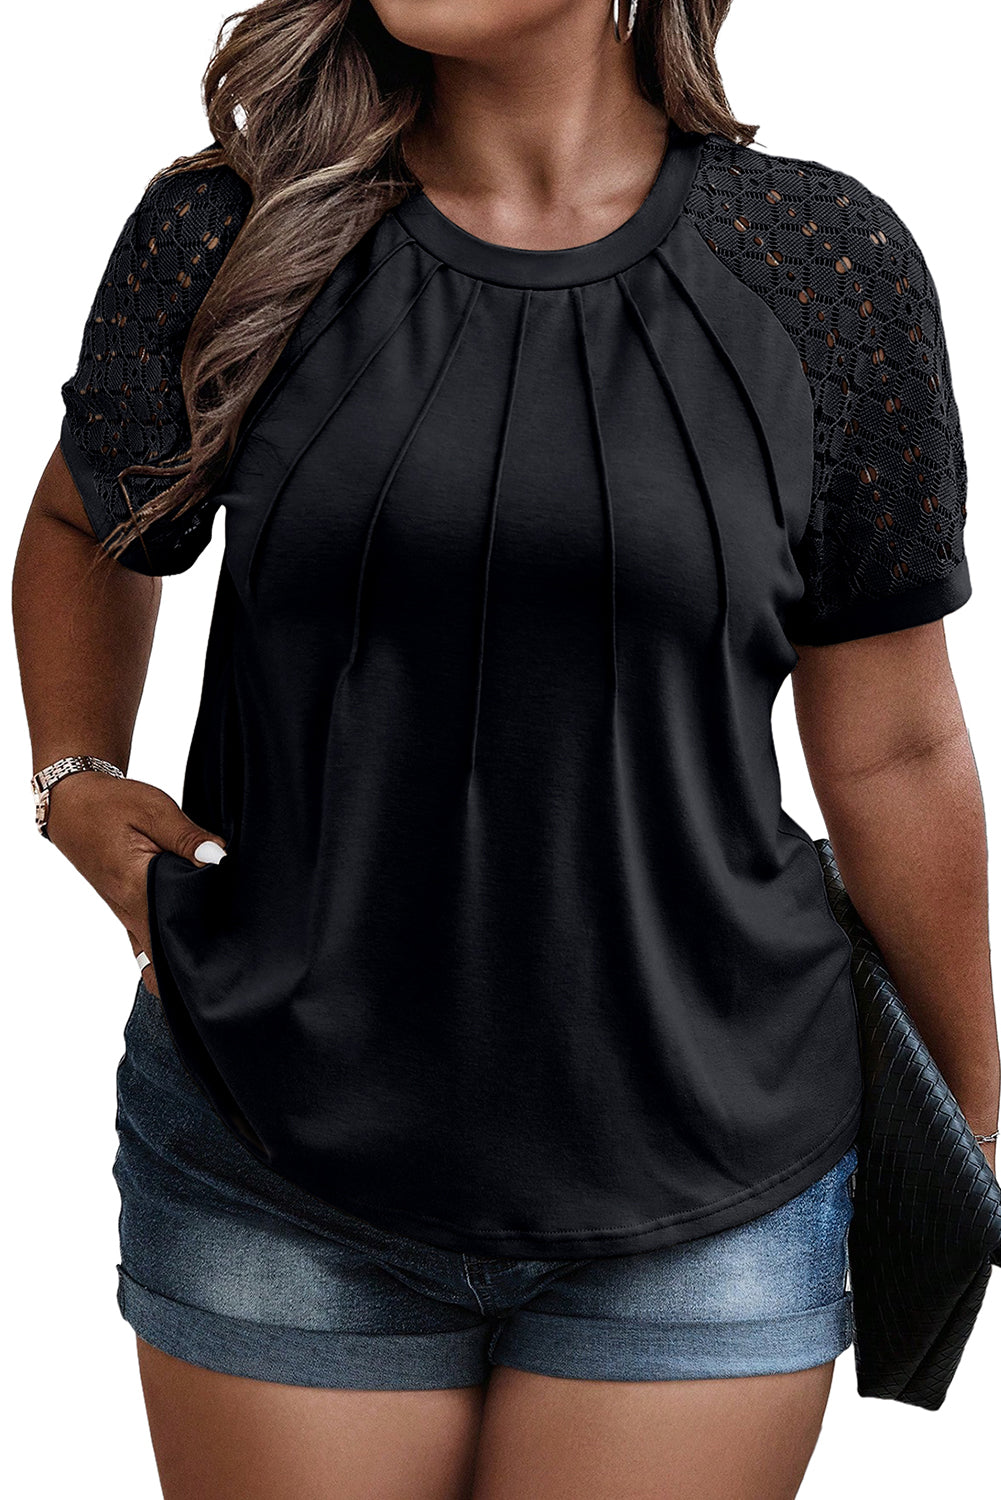 Black Lace Splicing Sleeves Seam Detail Plus Size Top Pre Order Plus Size JT's Designer Fashion